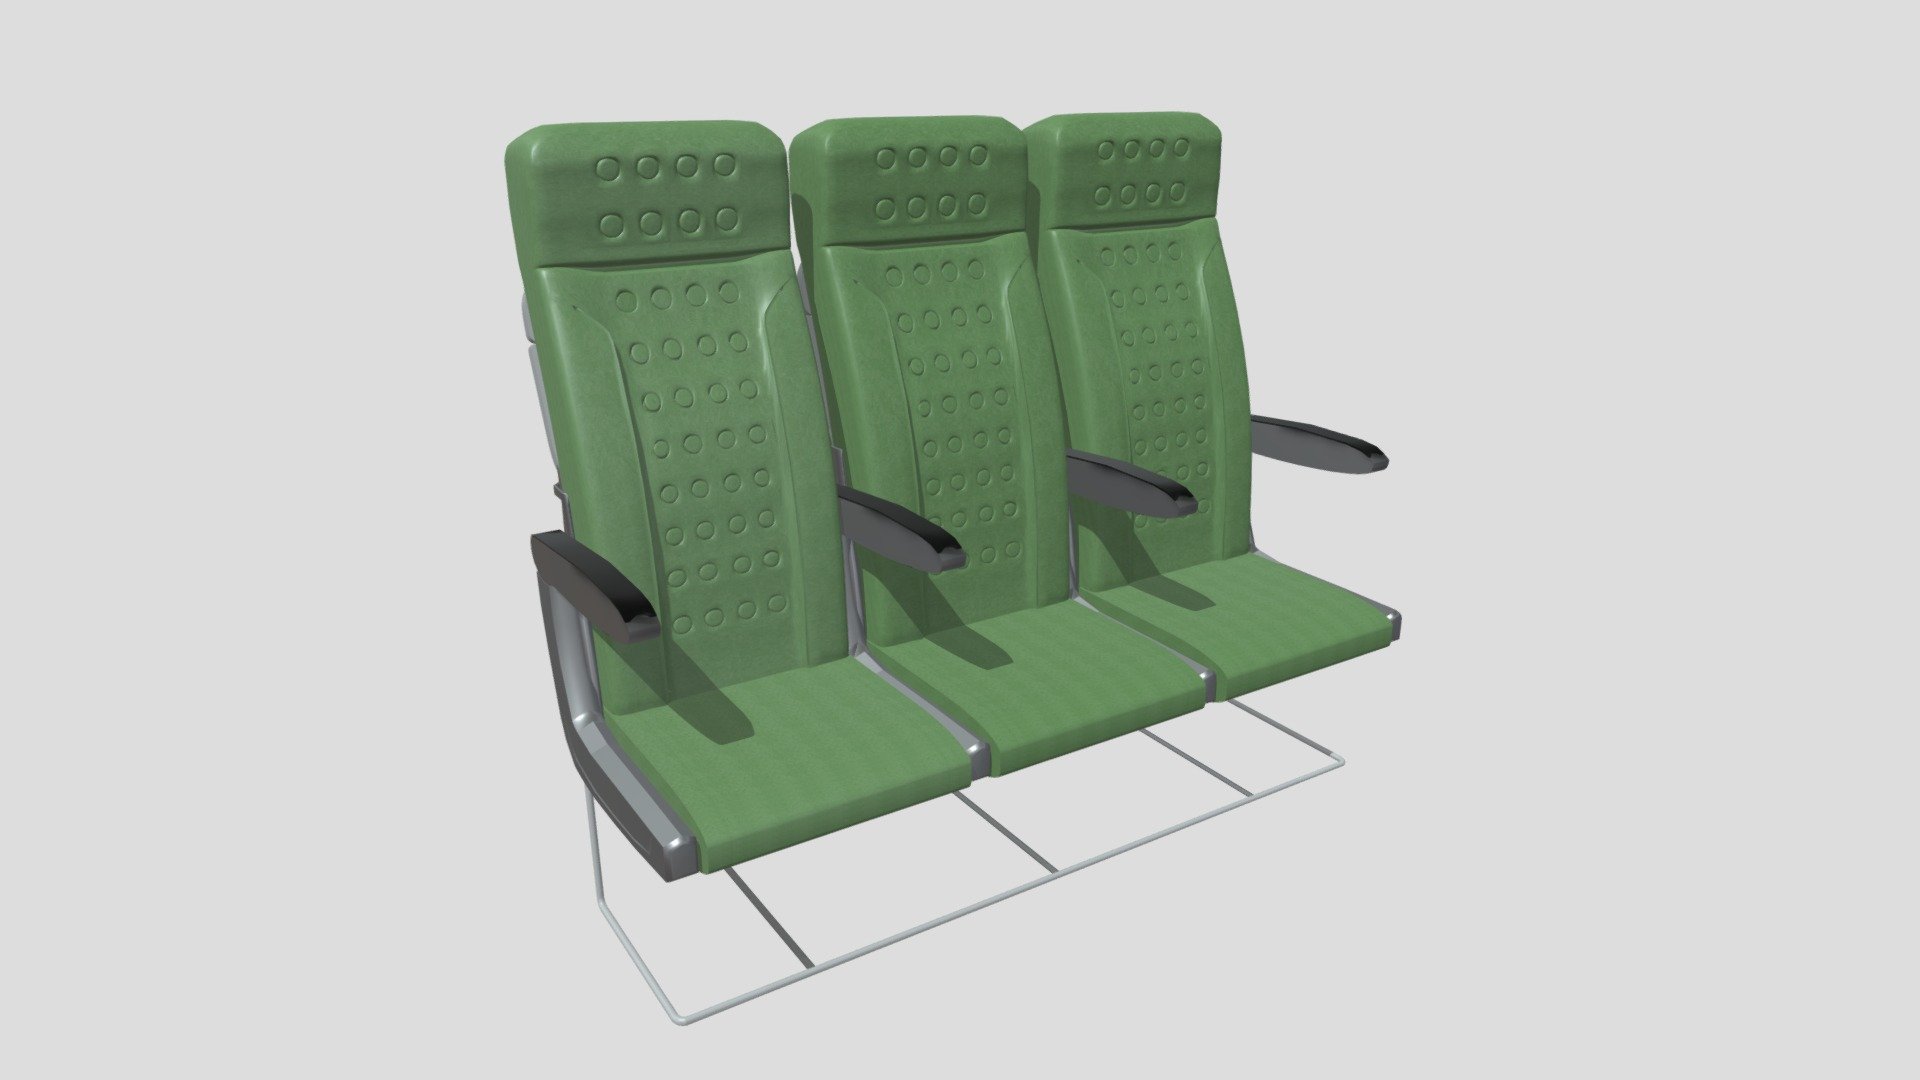 3d model of airplane seats from transavia airlines - Airplane seats - 3D model by sebastian14094 3d model